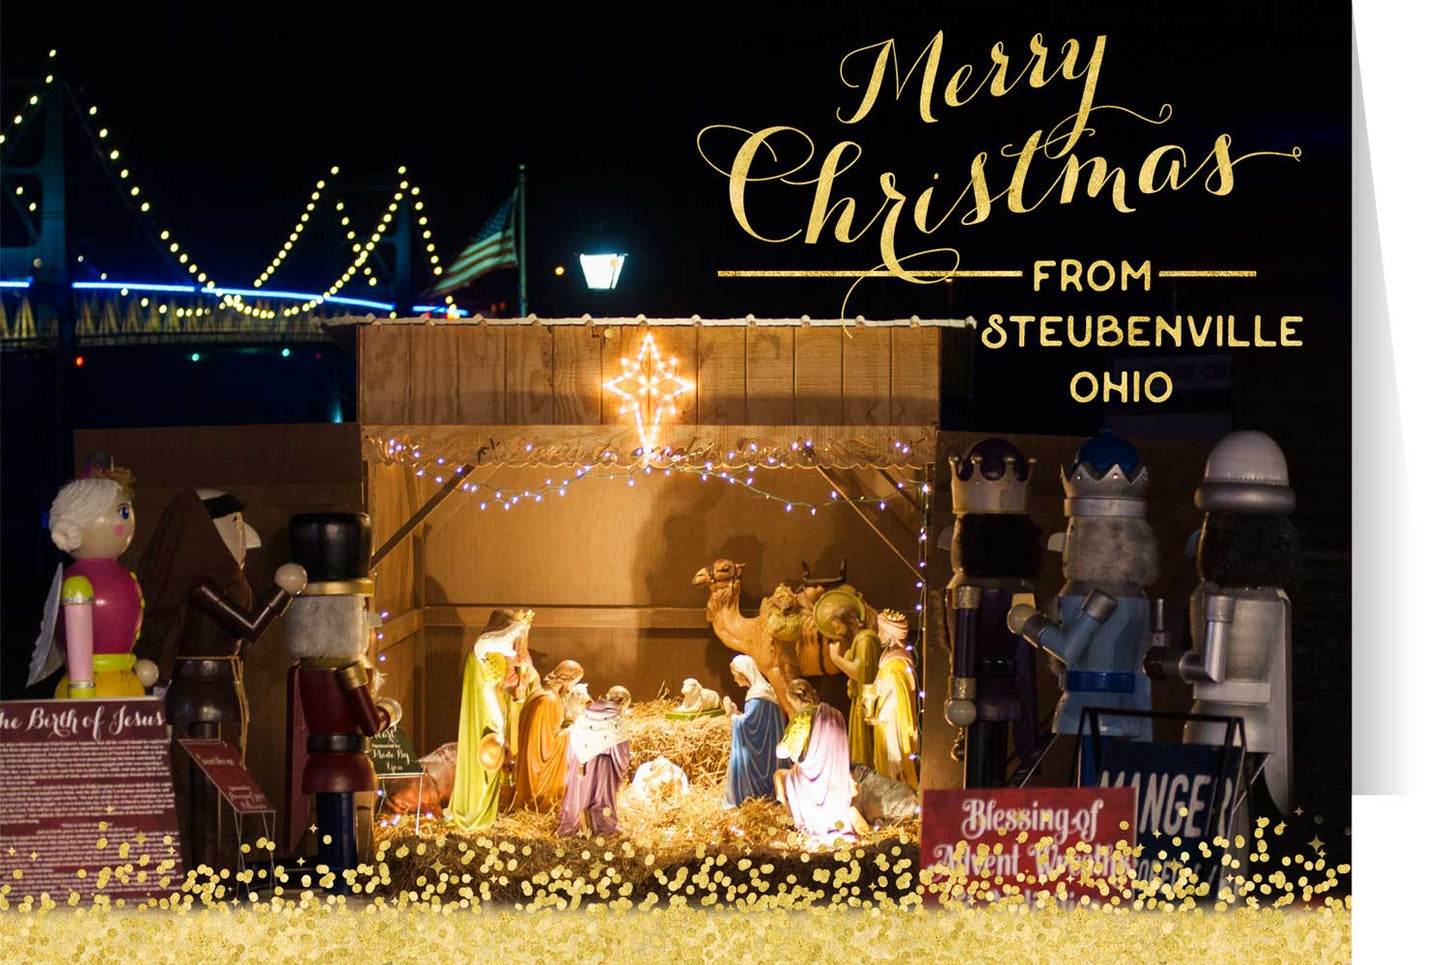 Steubenville Nutcracker Village Nativity Scene Christmas Cards (Box of 25)